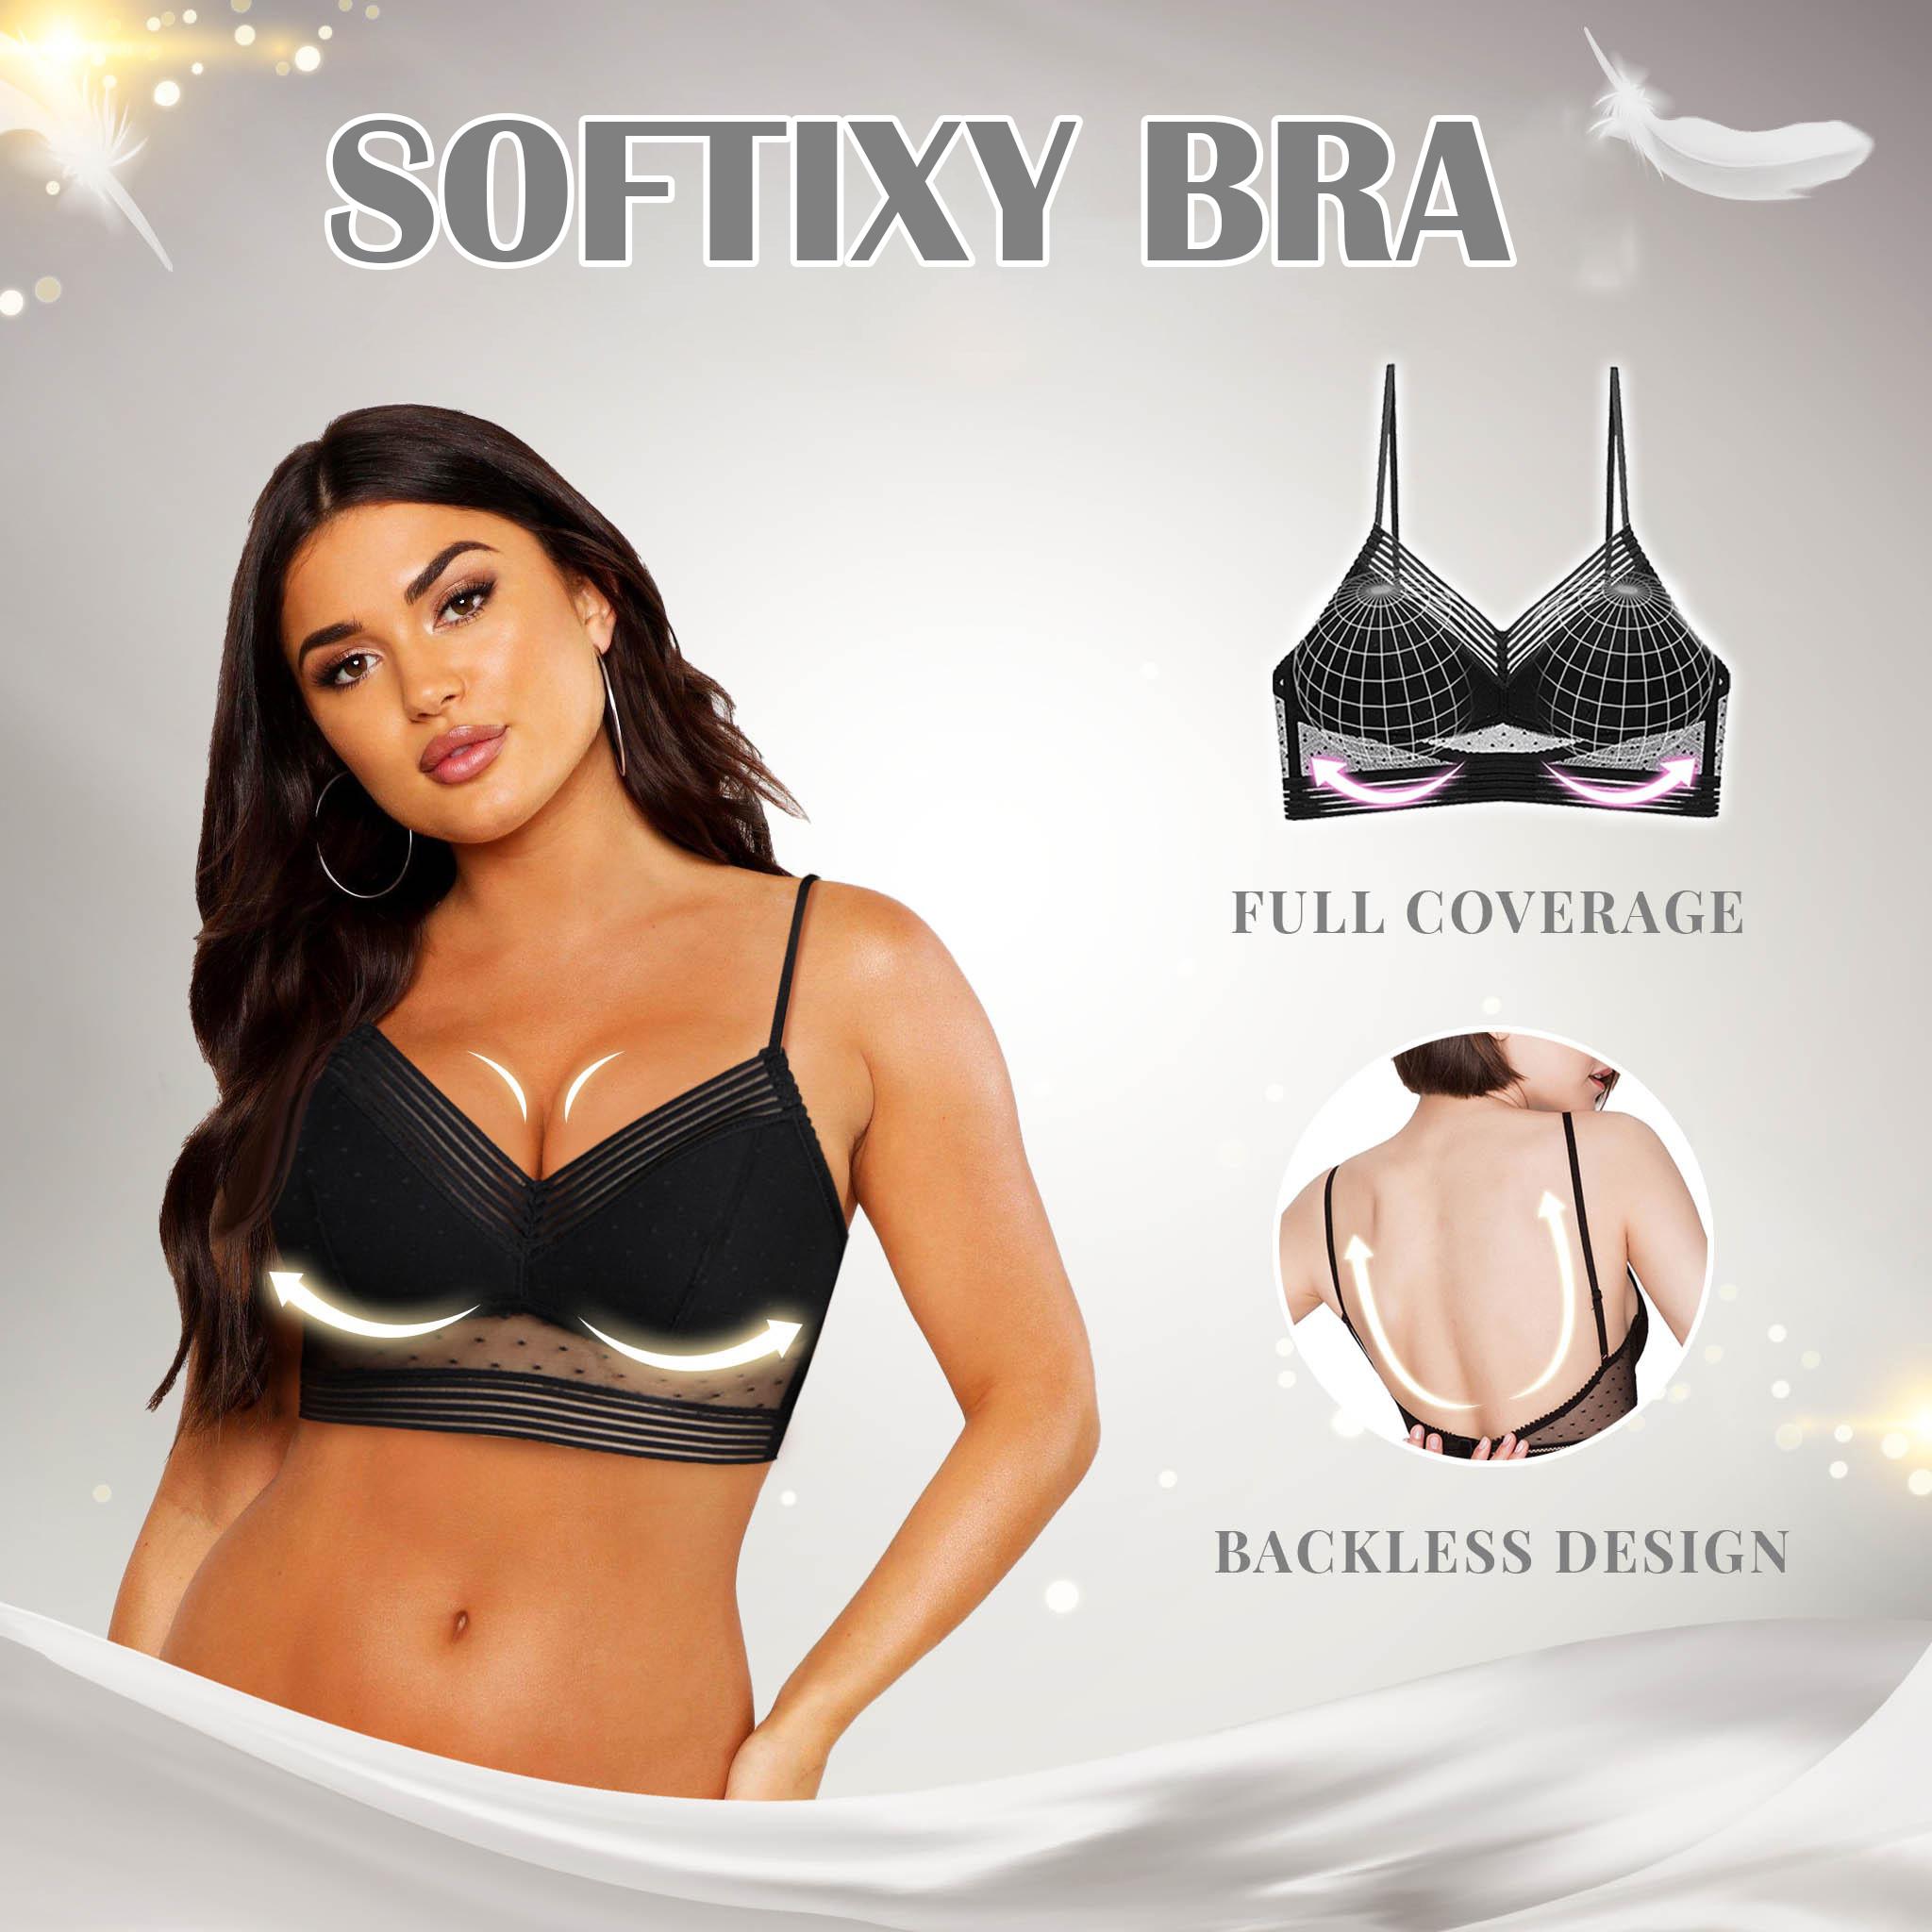 Softixy Bra - Starry Bra - Low Back Wireless Lifting Full Coverage Lace Bra